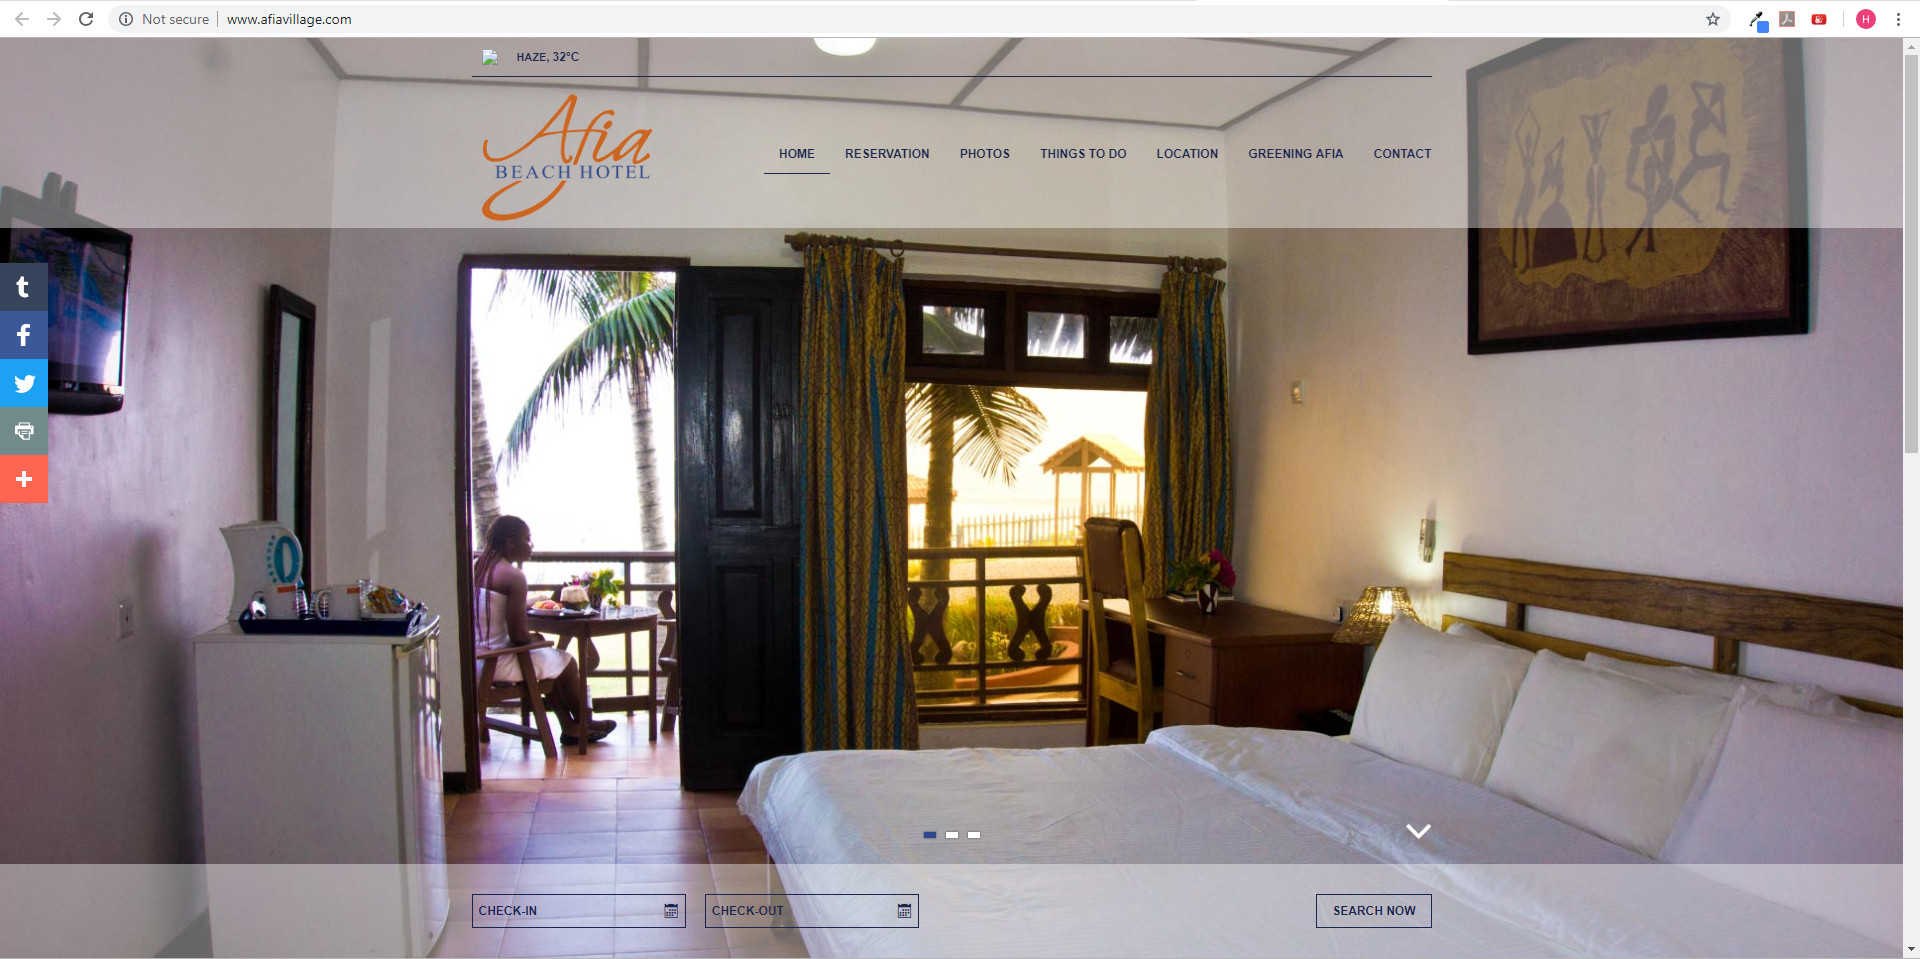 Afia Beach Hotel home page | Hotels | Web design | Websites | booking engine | digital marketing | Ghana | Togo | Benin